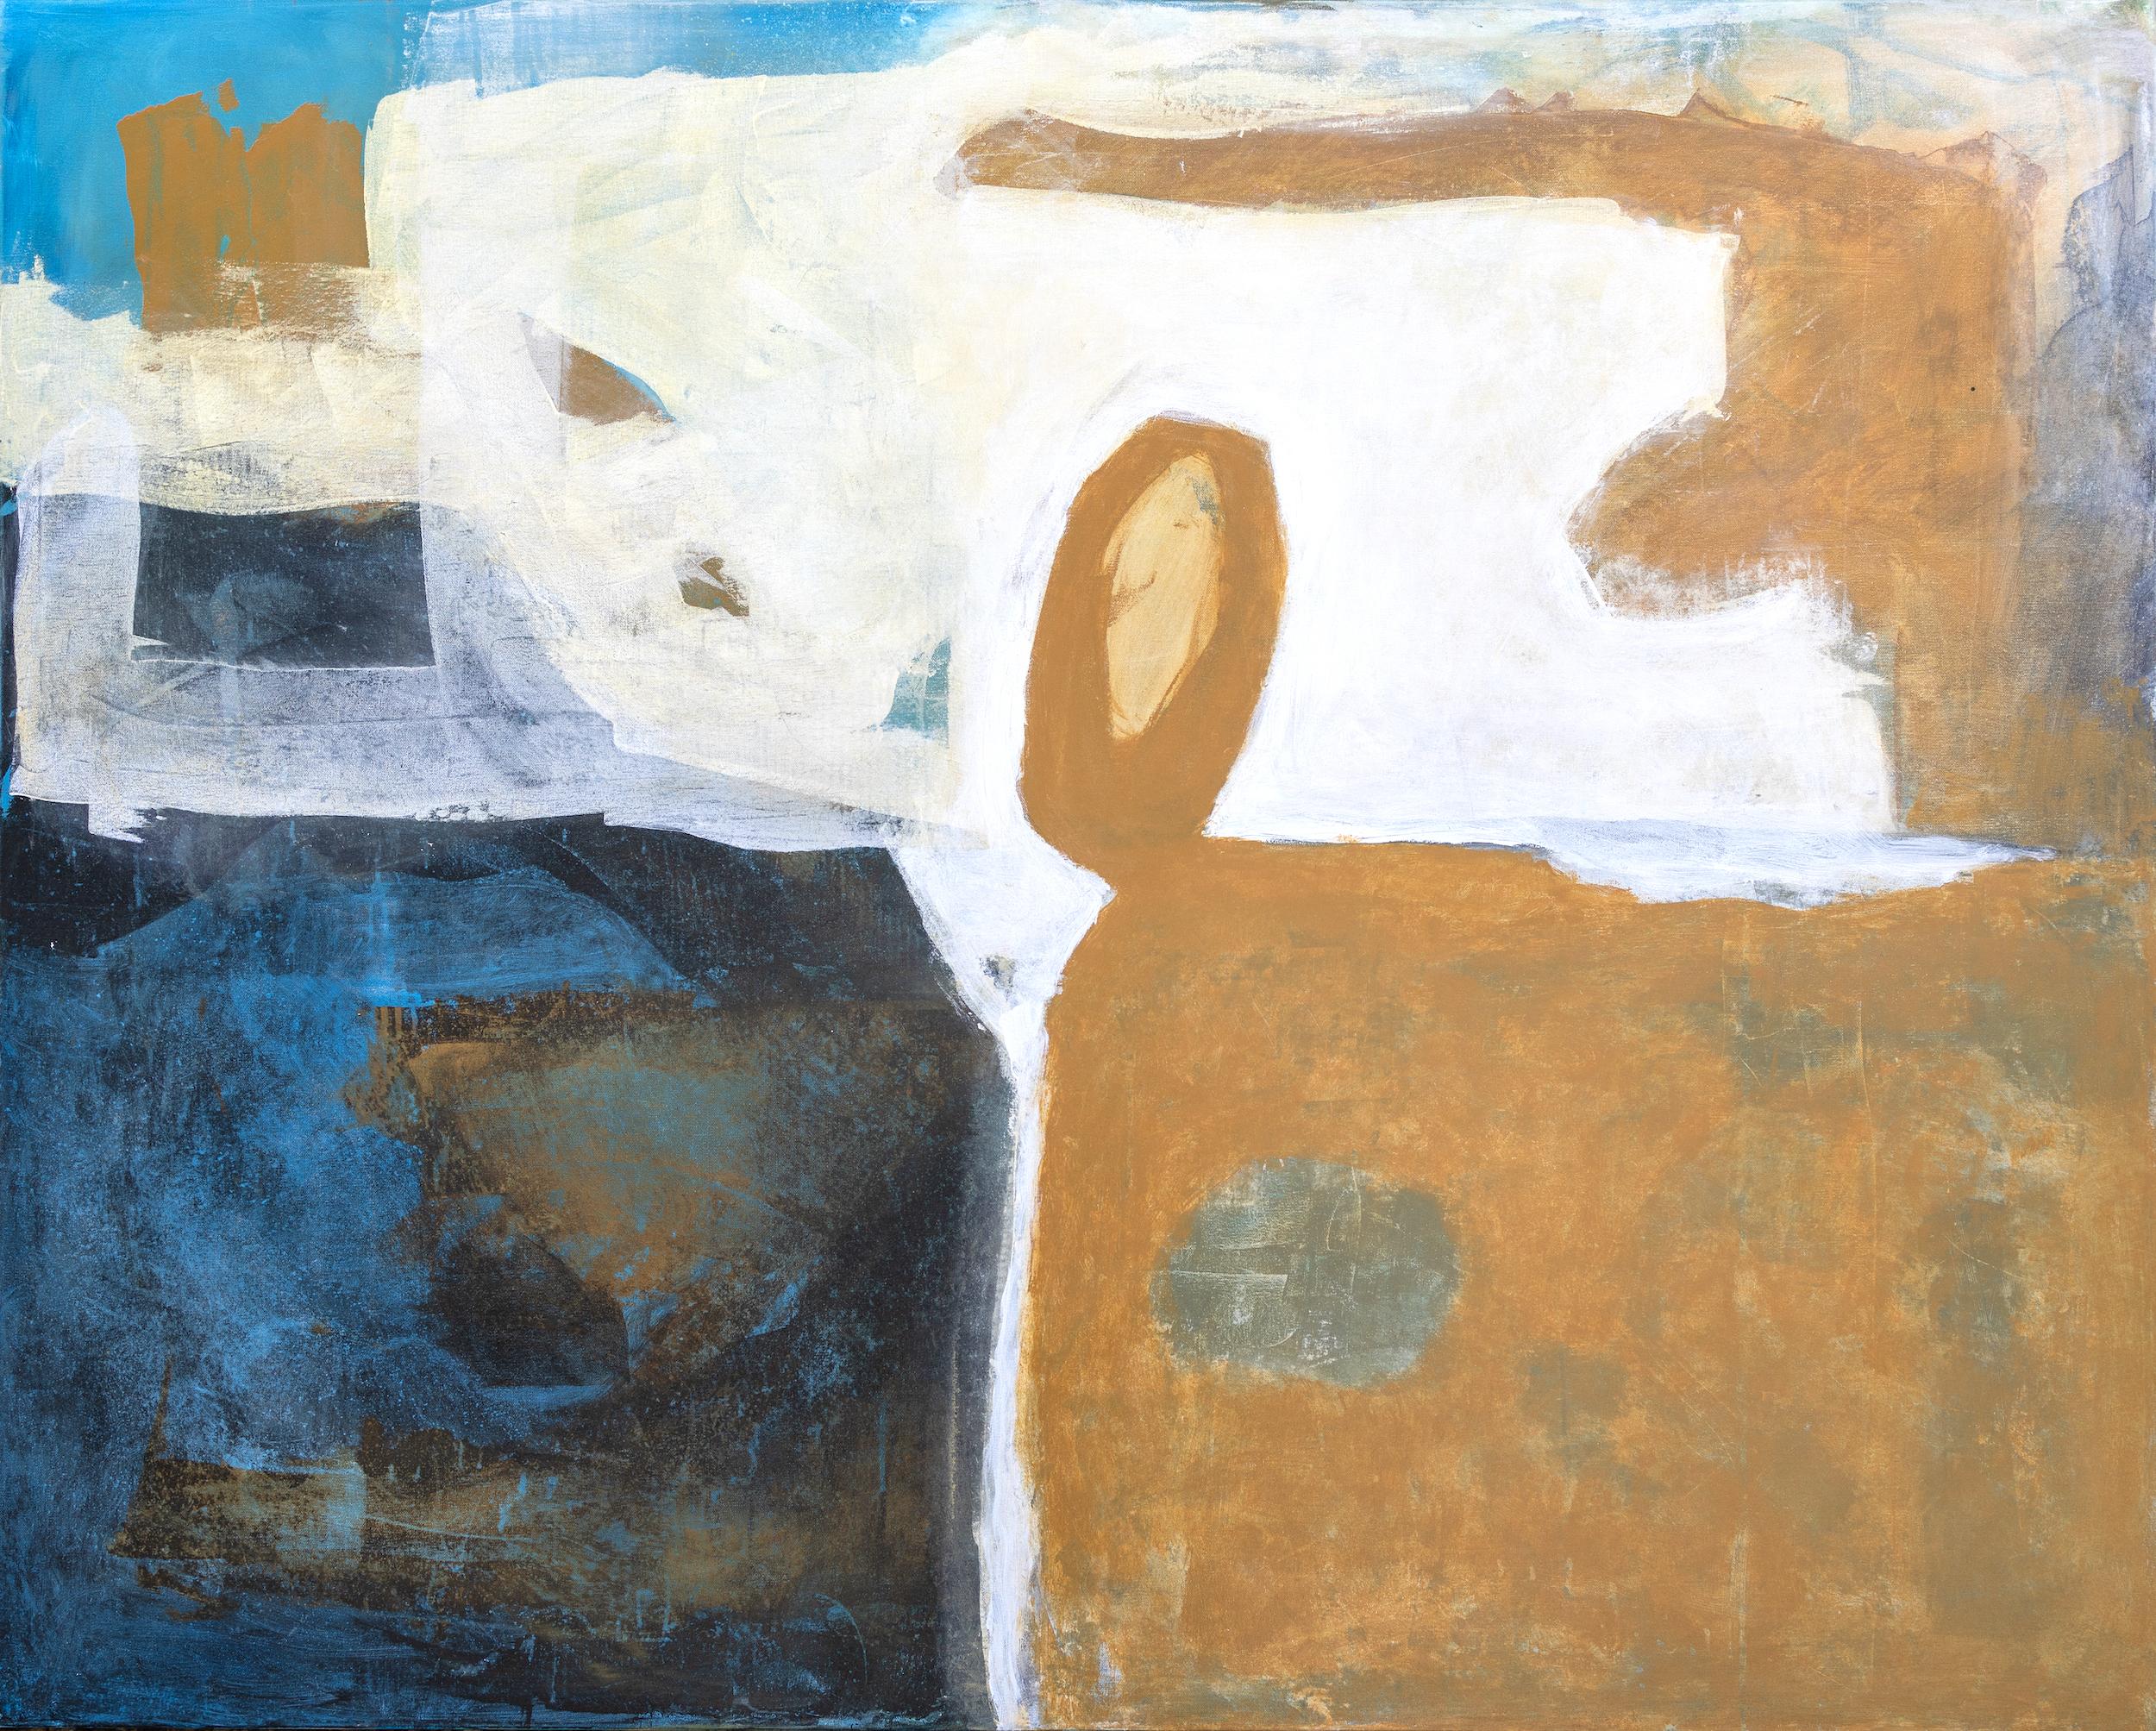 Abstract Painting Tom Reno - Bleu, ocre, noir et blanc abstrait